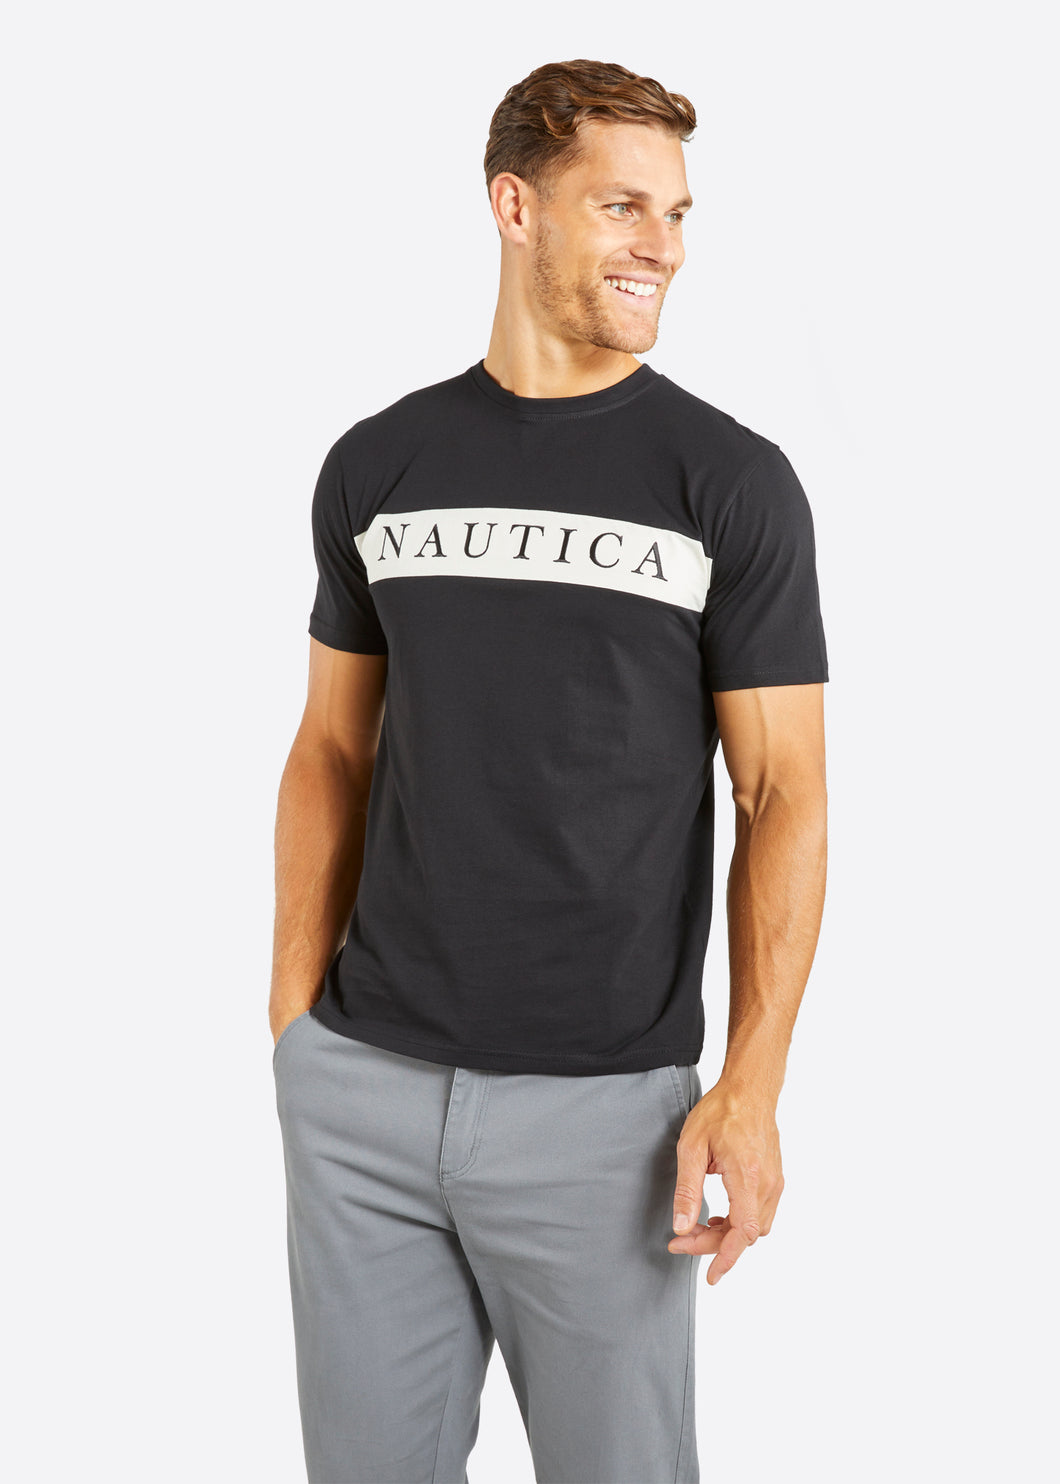 Nautica Sawyer T-Shirt - Black - Front